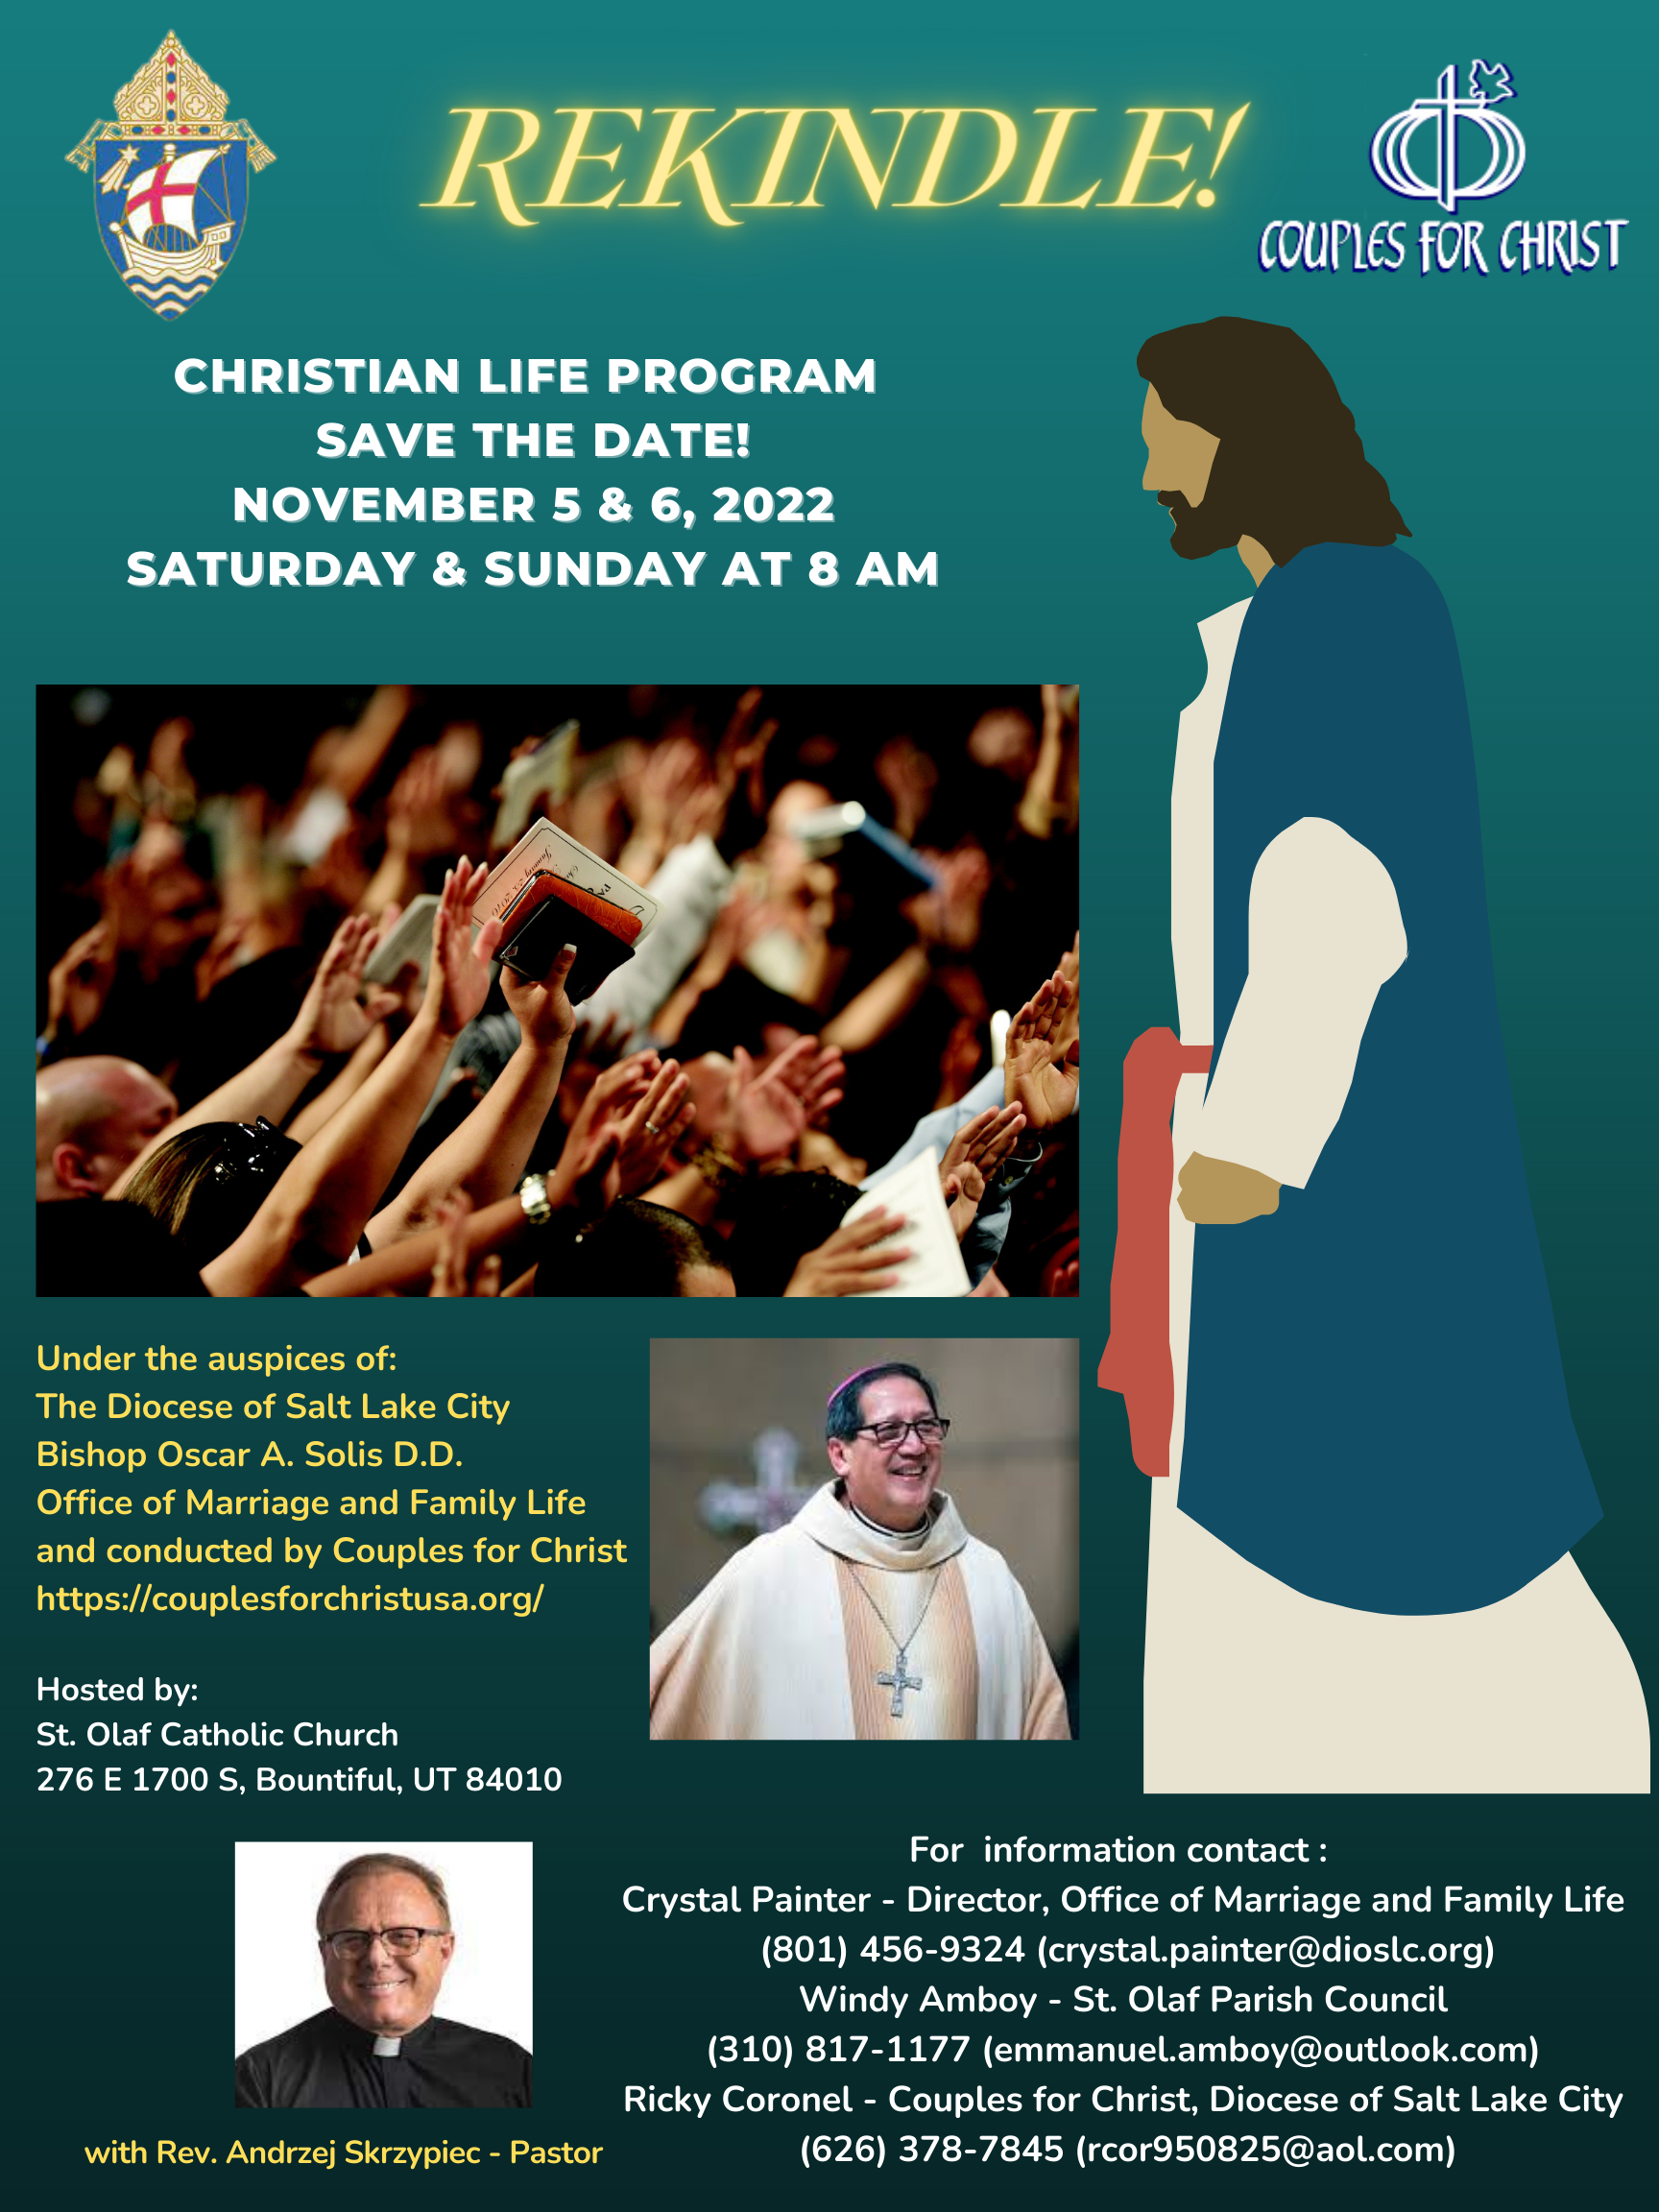 Couples for Christ - Rekindle Christian Life Program